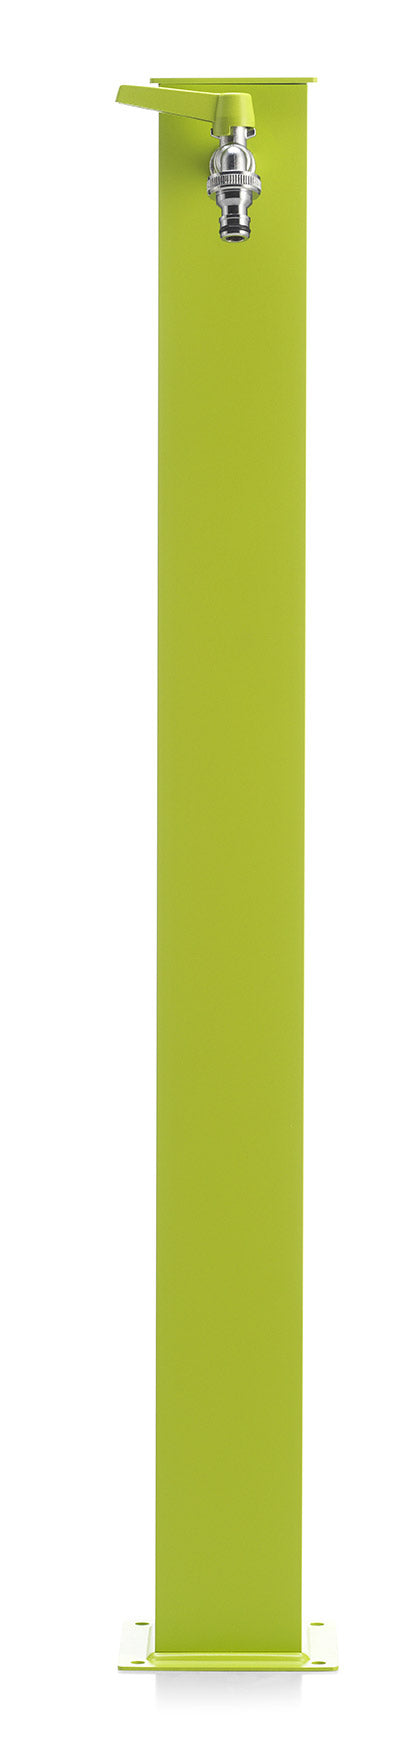 Fontana da Giardino con Rubinetto Belfer 42/Q Verde Acido acquista